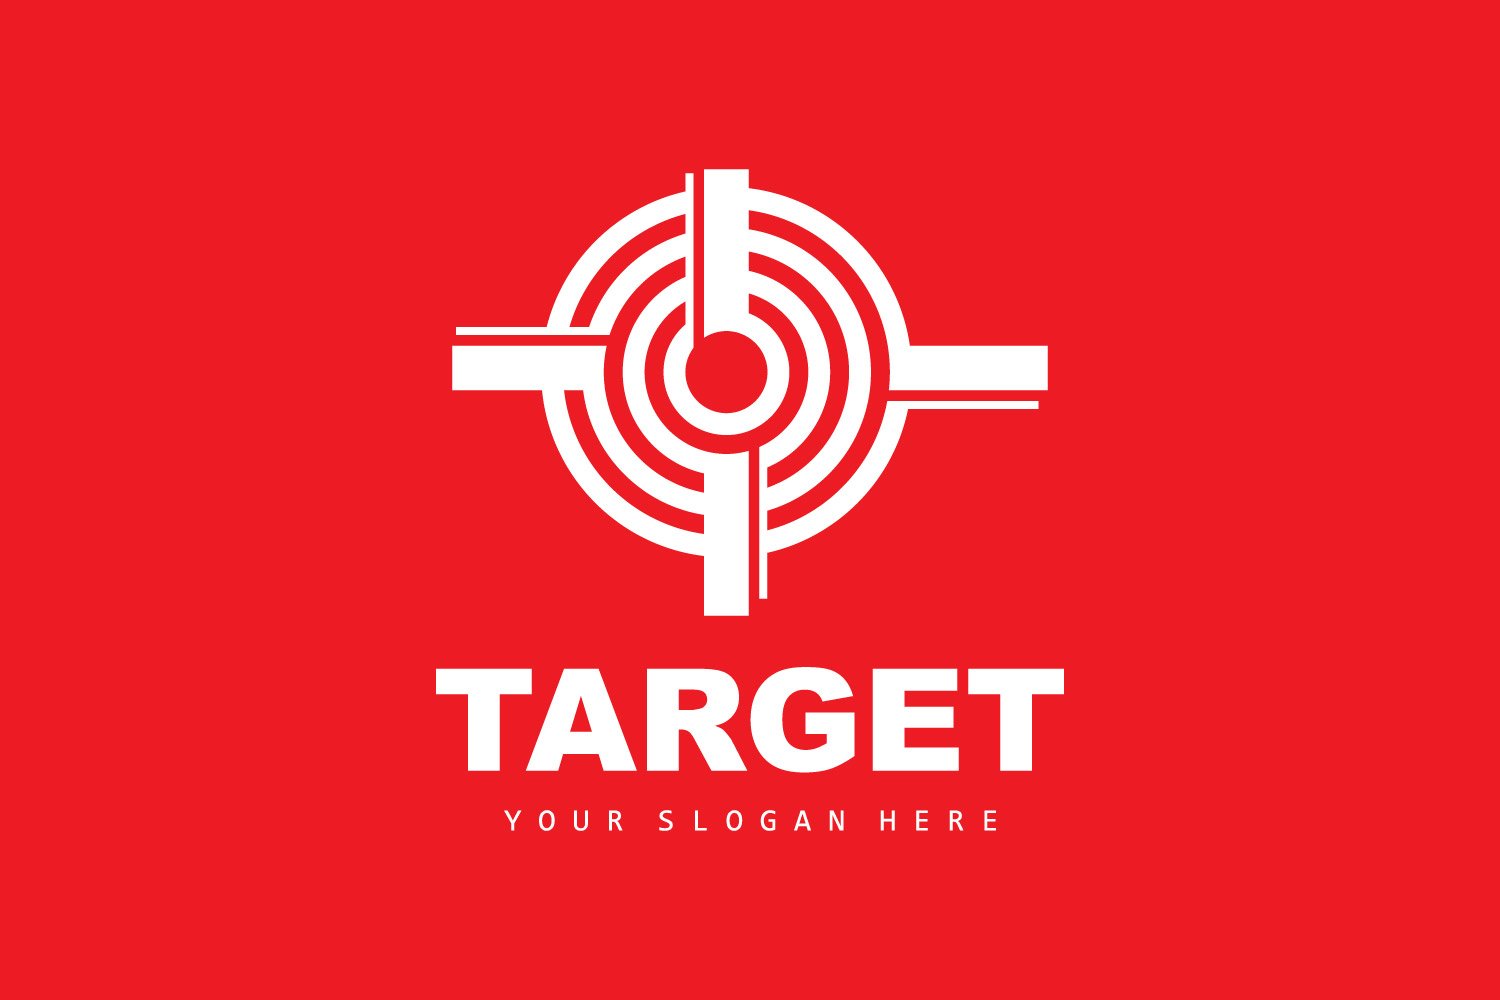 Template #405726 Vector Target Webdesign Template - Logo template Preview